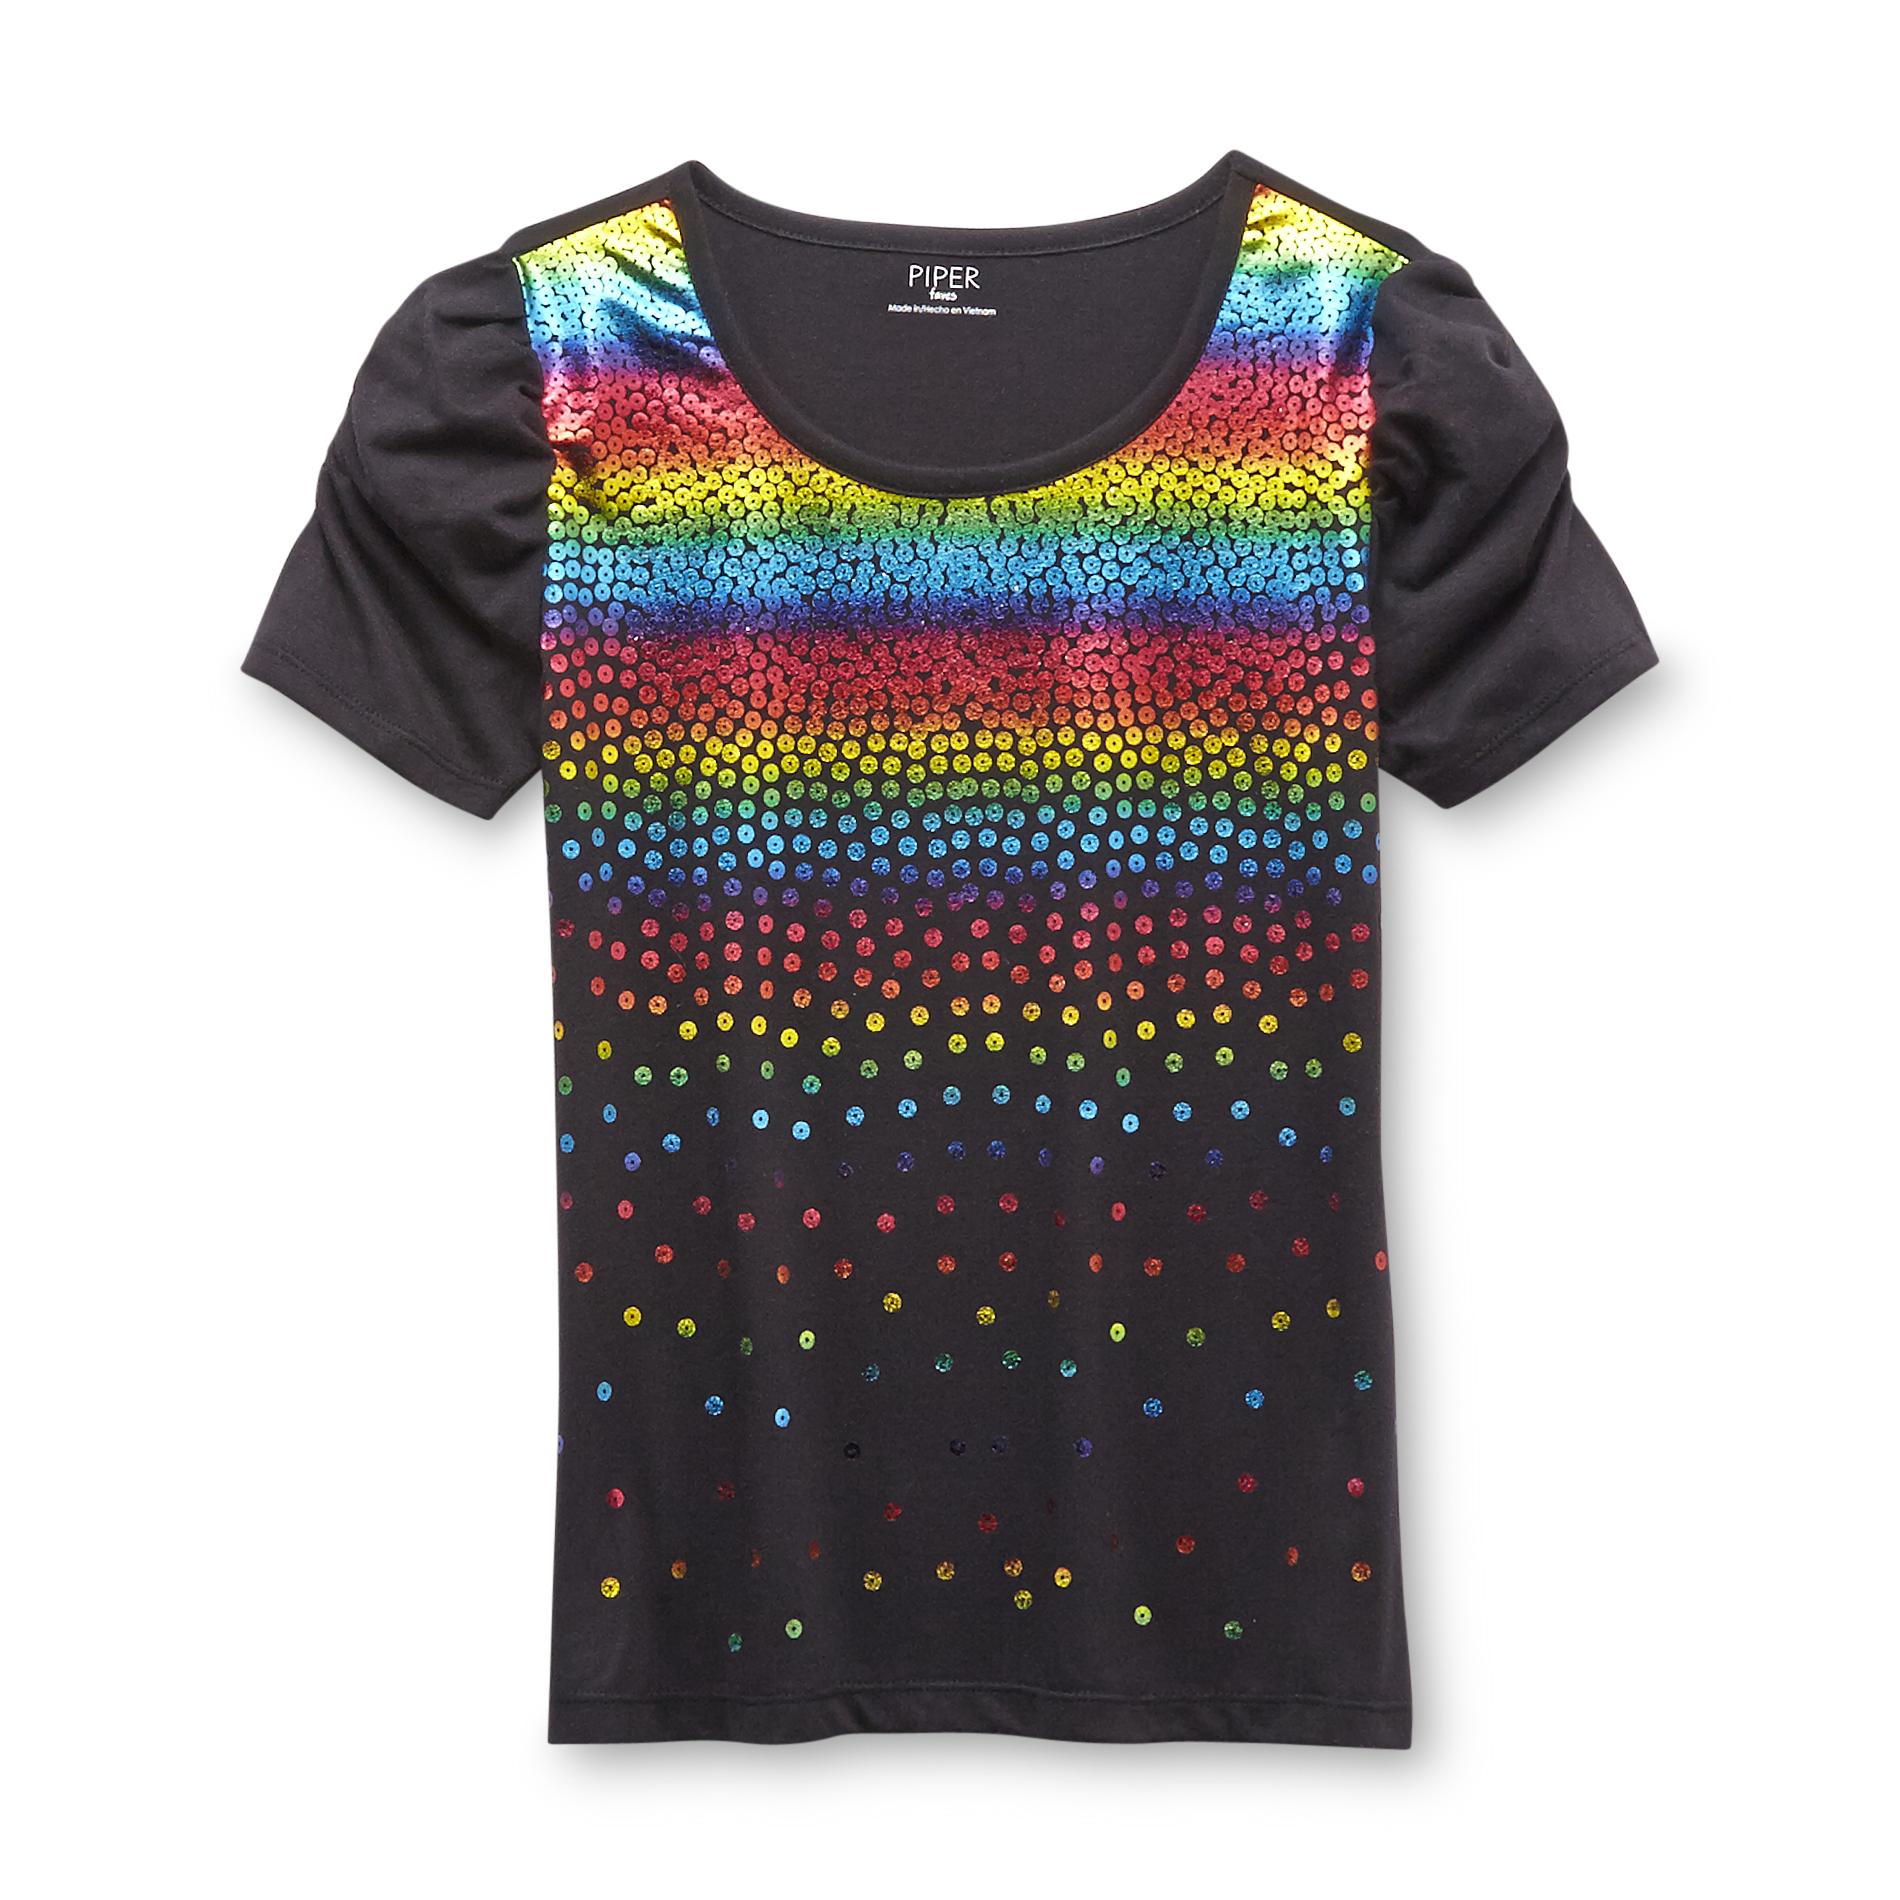 Piper Faves Girl's Foil-Print T-Shirt - Multicolor